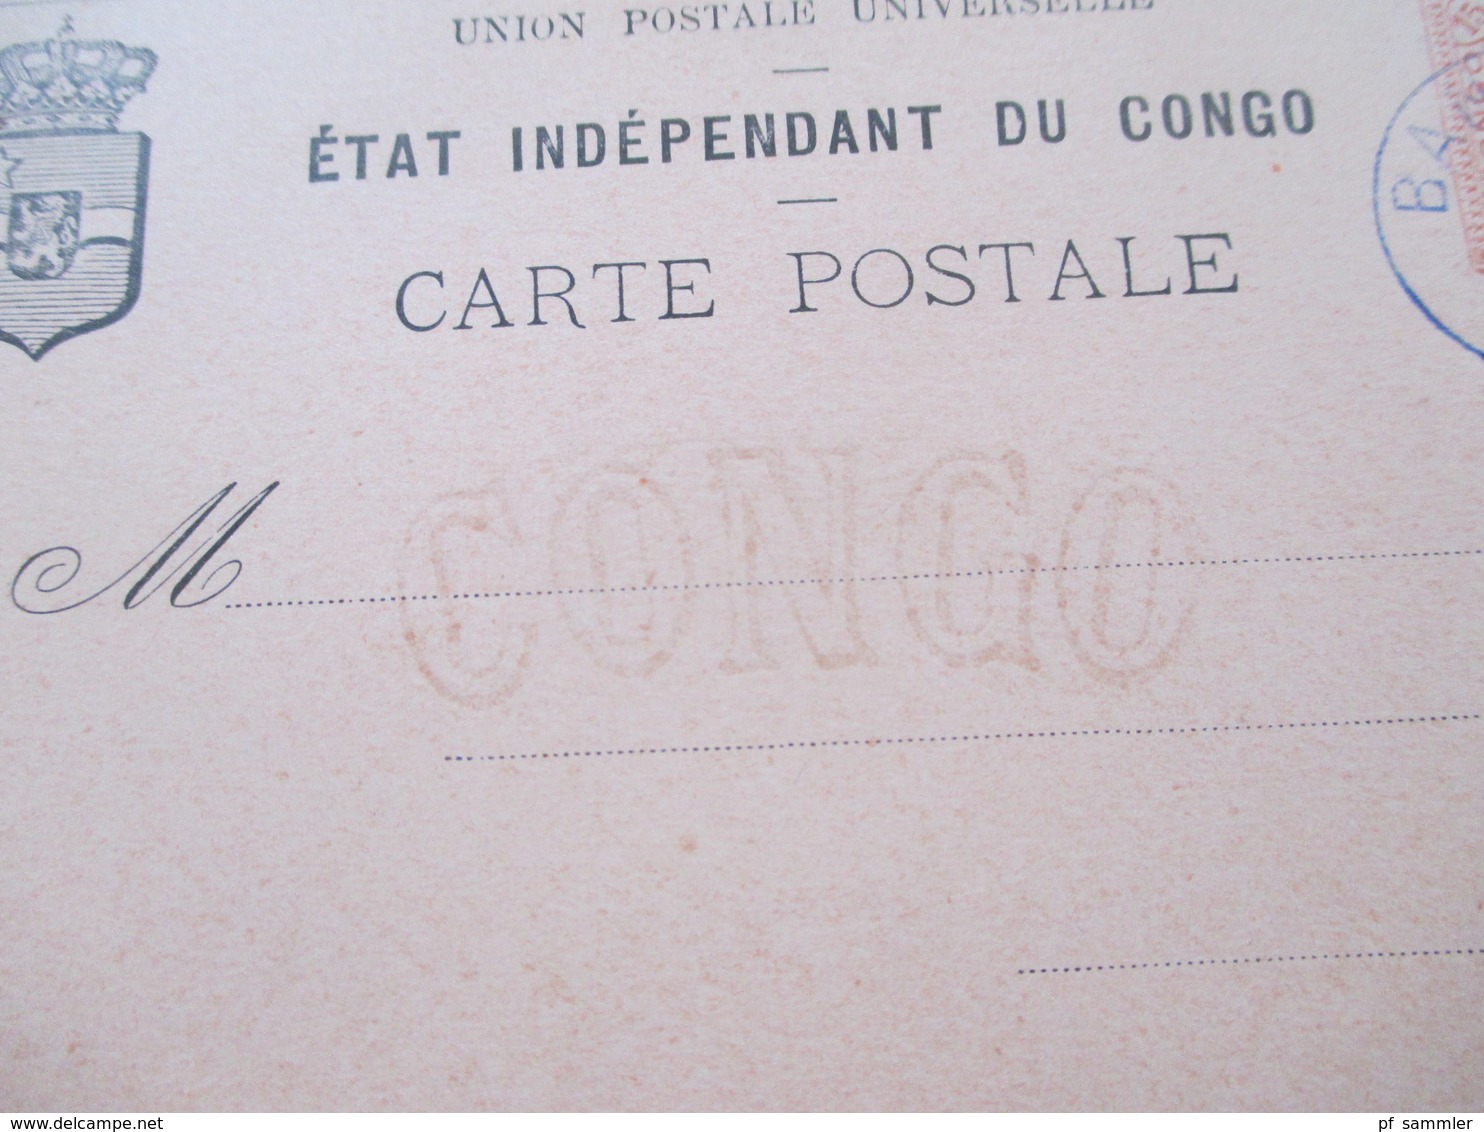 Belgisch - Kongo Ganzsache Mit Blauem Stempel! Banana 1888 Aber Ungelaufen / Blankokarte. Etat Independant Du Congo - Lettres & Documents